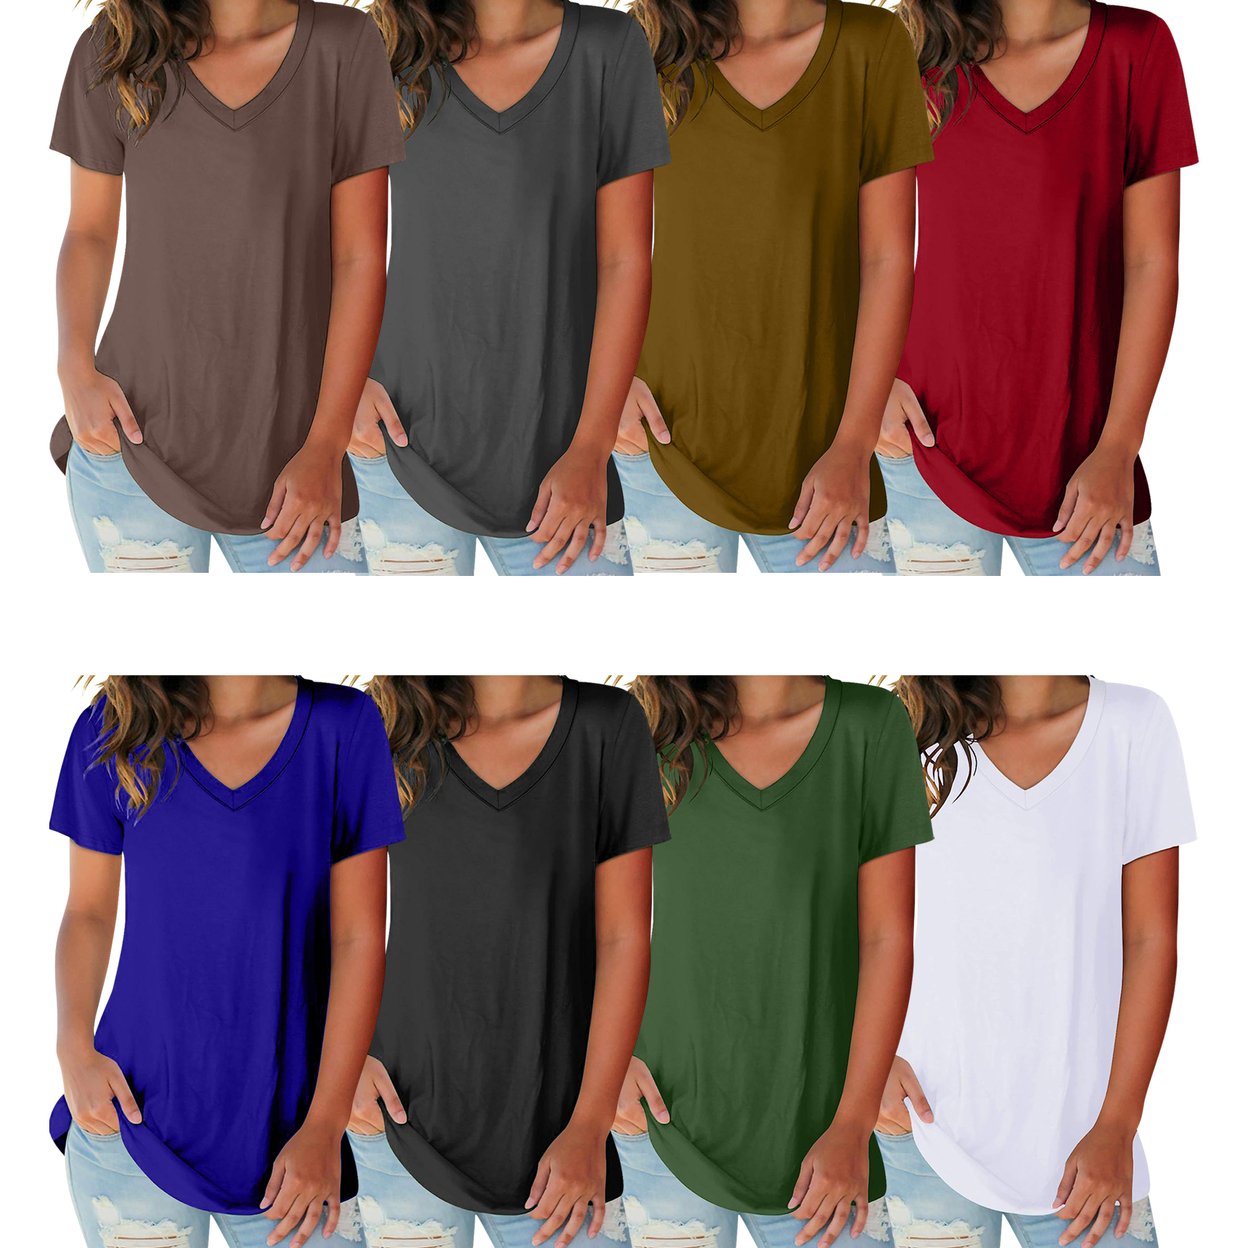 2-Pack: Women's Ultra Soft Smooth Cotton Blend Basic V-Neck Short Sleeve Shirts - Grey & Green, Xx-large